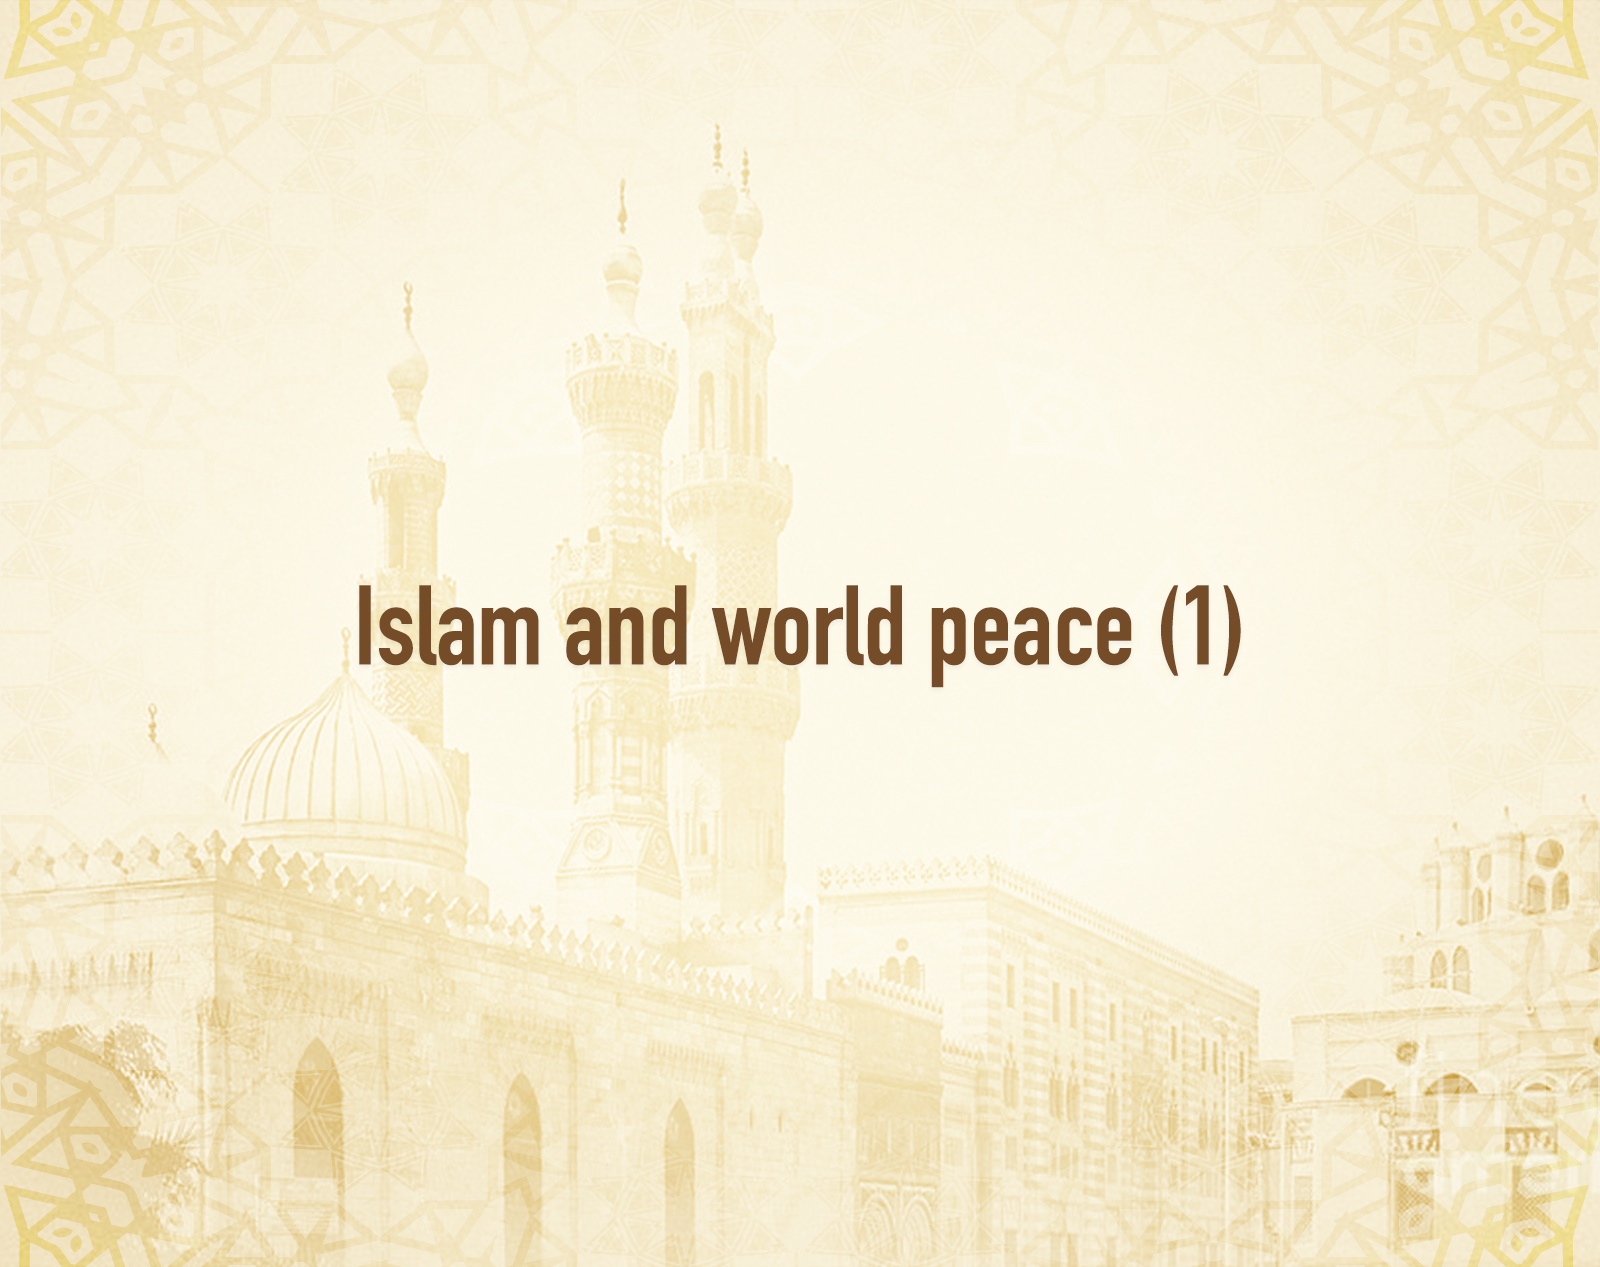 Islam and world peace (1).jpg